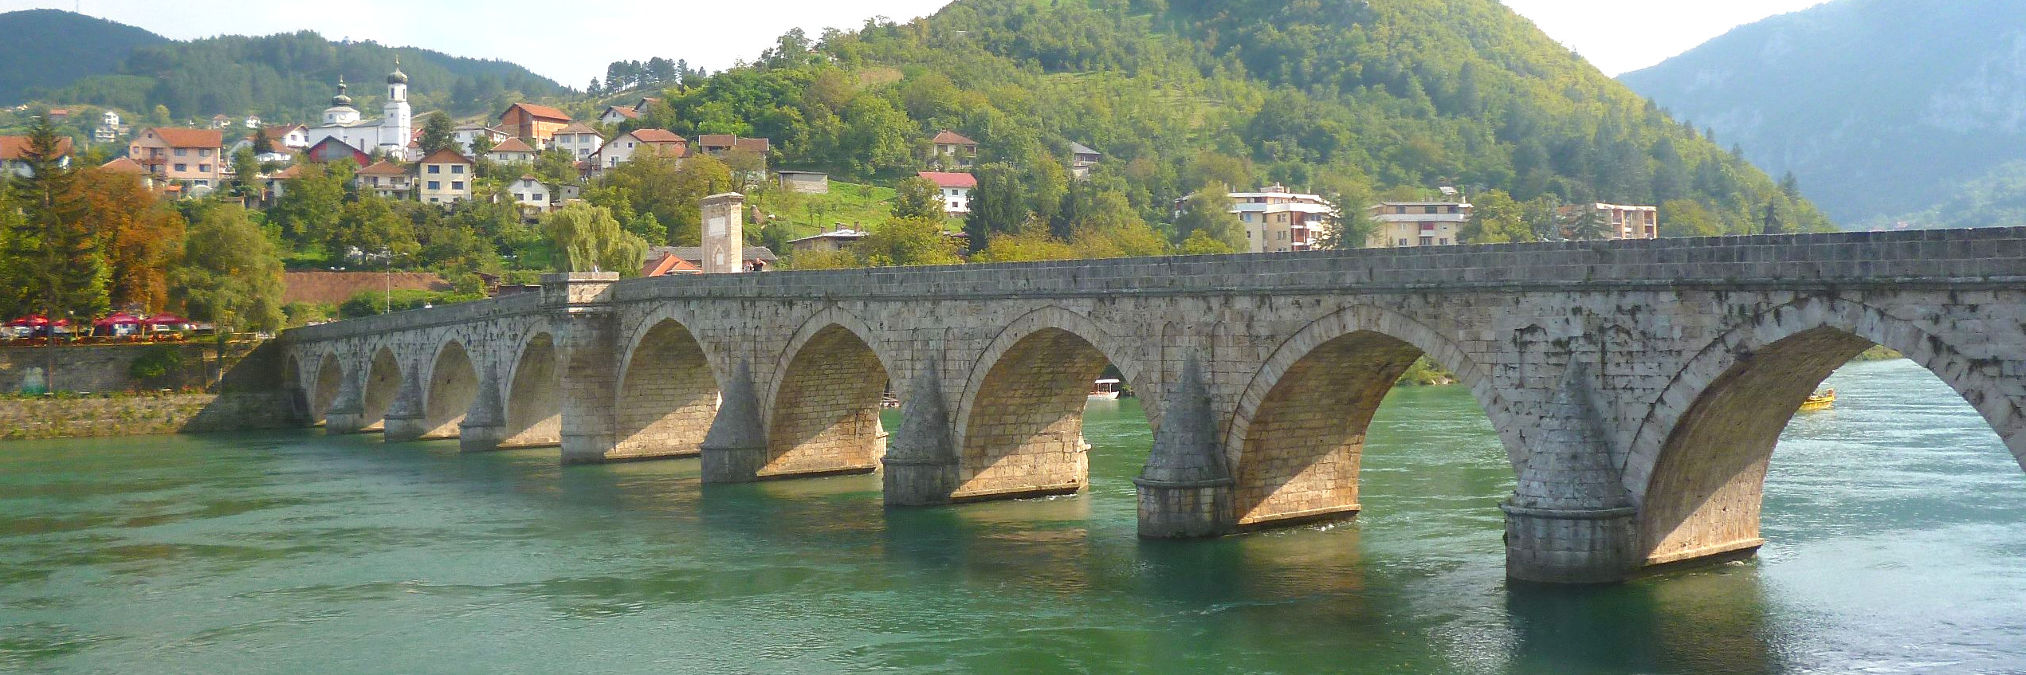 Мост Мехмеда-паши Соколовича. Фото: Елена Арсениевич, CC BY-SA 3.0